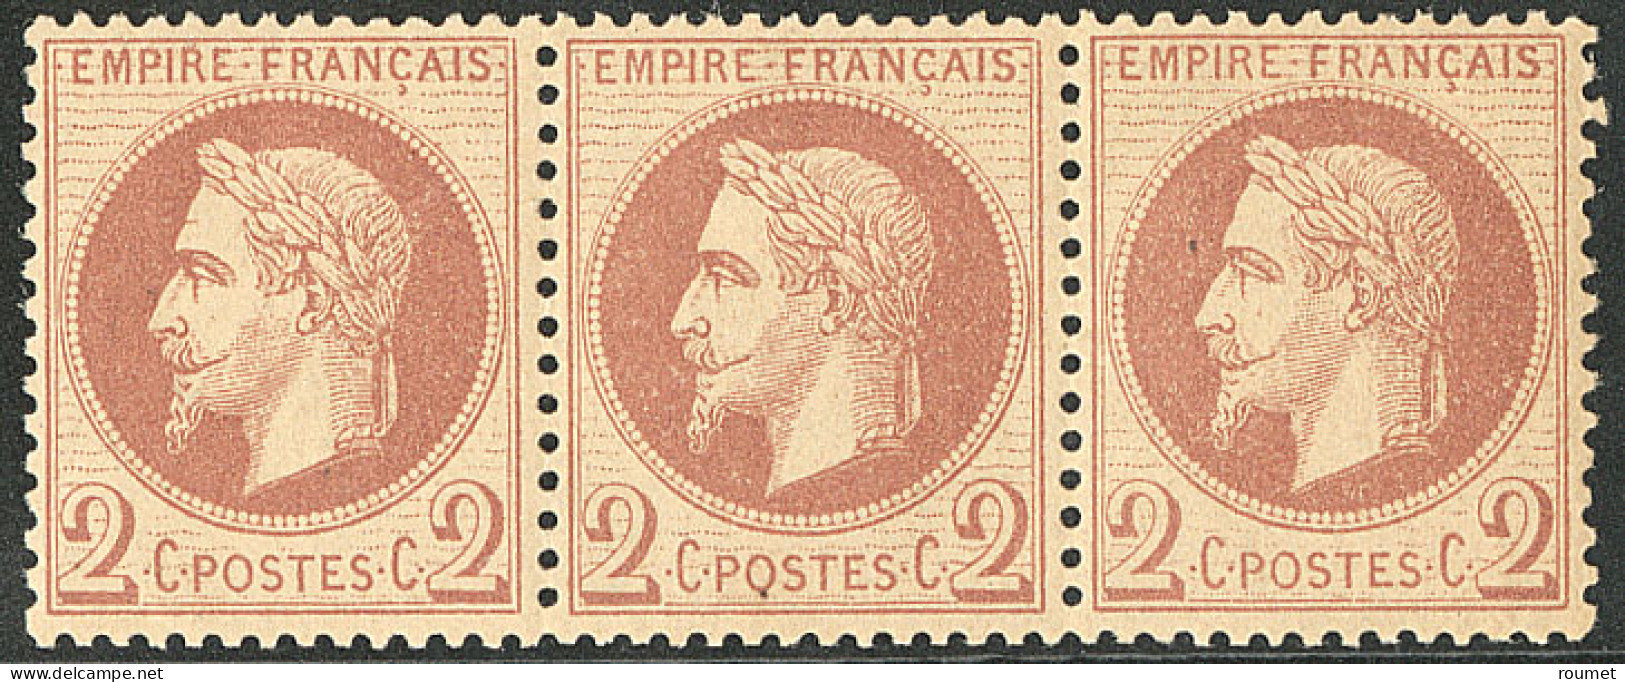 ** No 26B, Rouge-brun Clair, Bande De Trois (charnière Sur L'ex Central), Très Frais. - TB - 1863-1870 Napoleone III Con Gli Allori